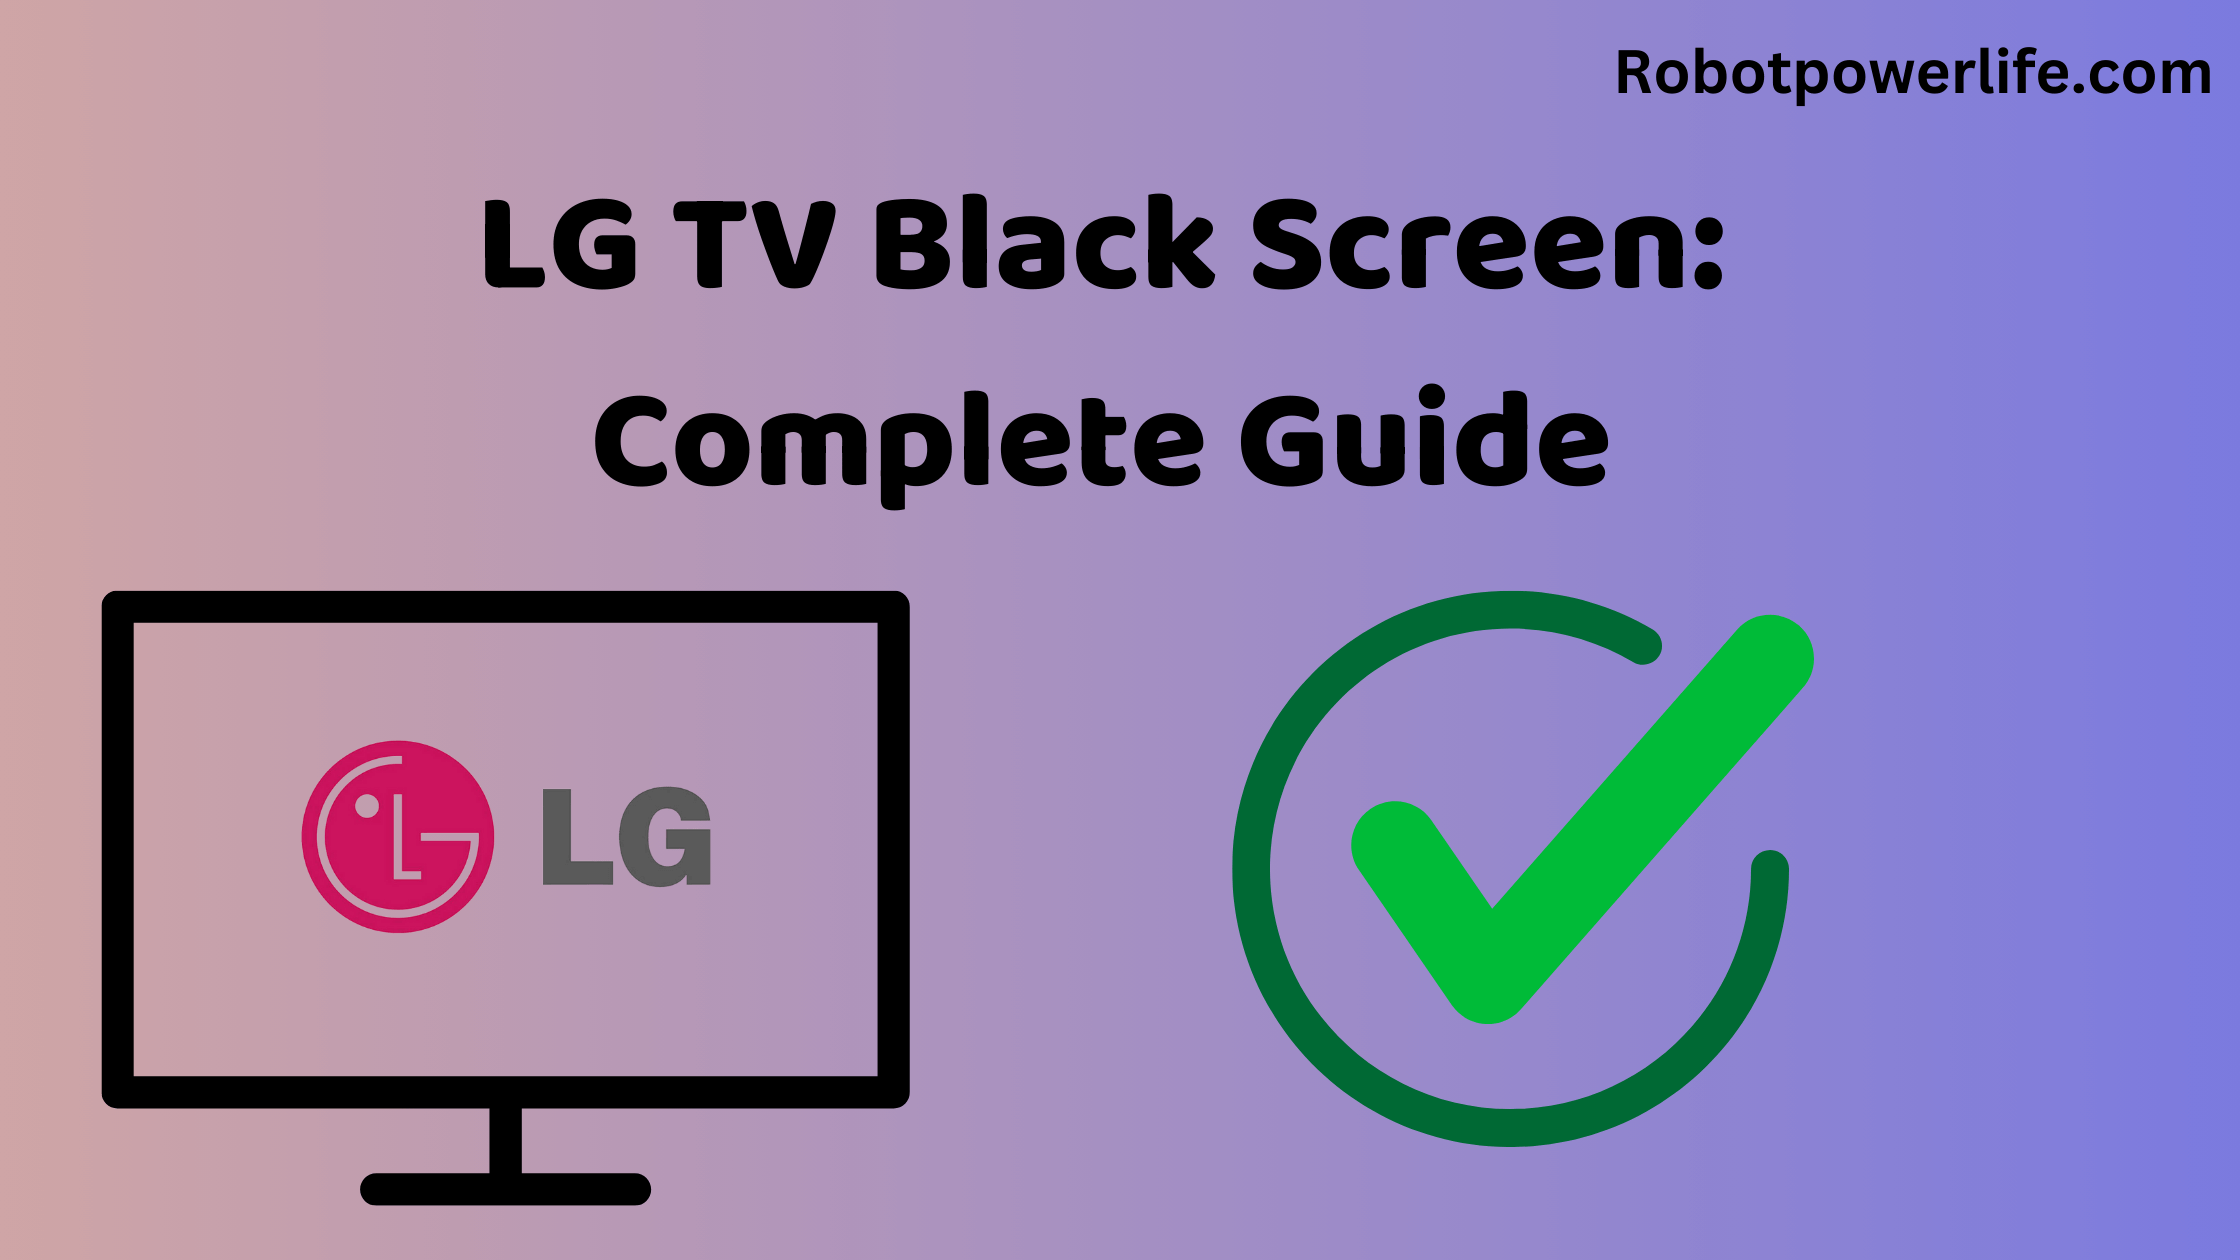 LG TV Black Screen Complete Guide